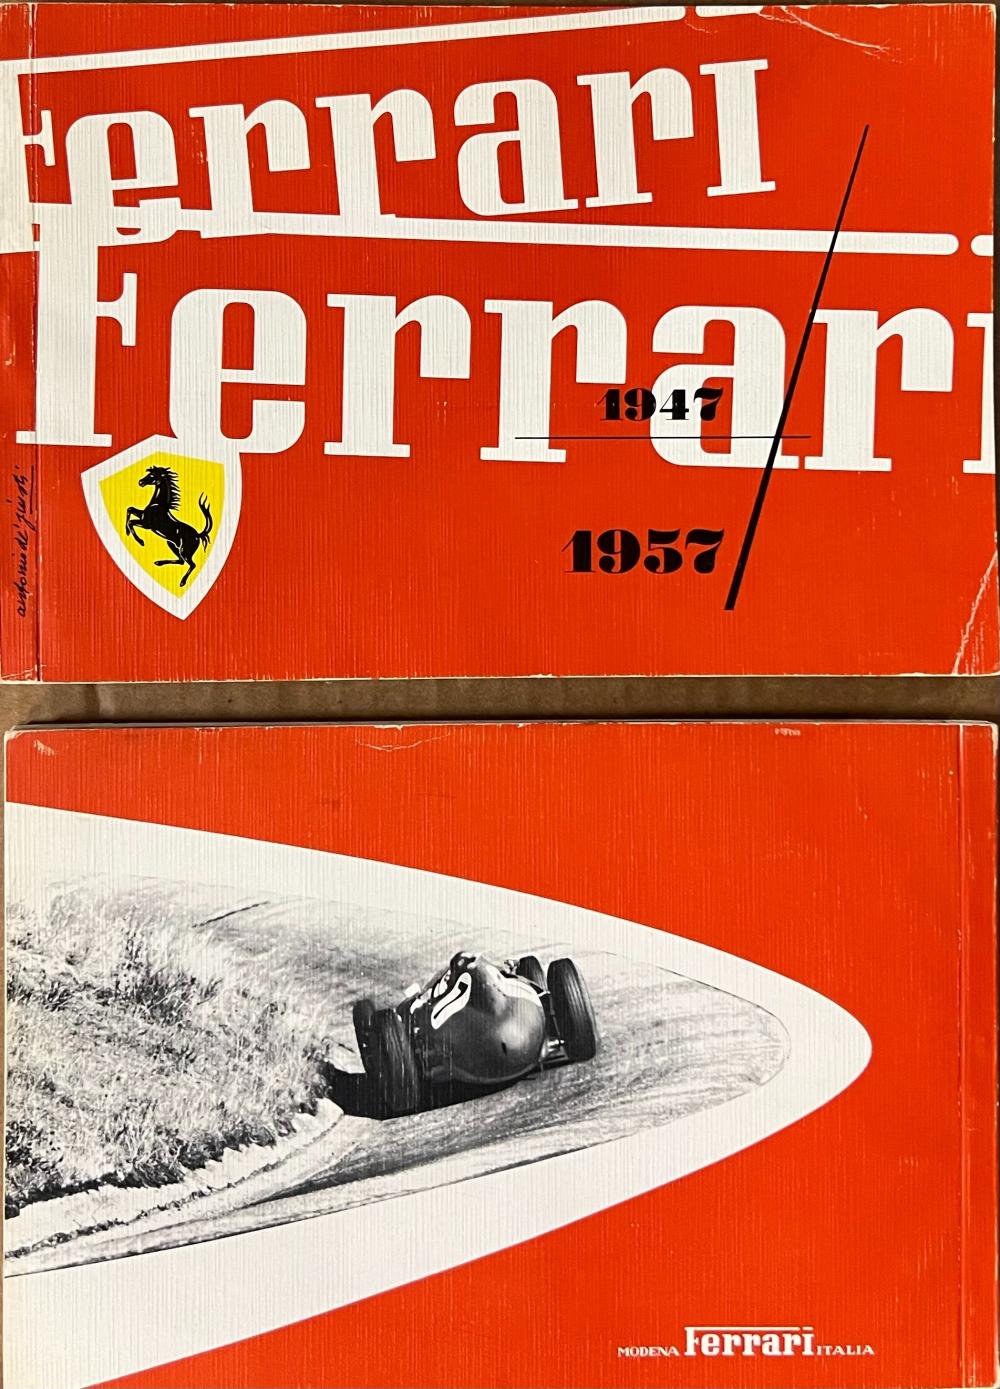 1947 1957 FERRARI YEARBOOK COVERS 2e29b8